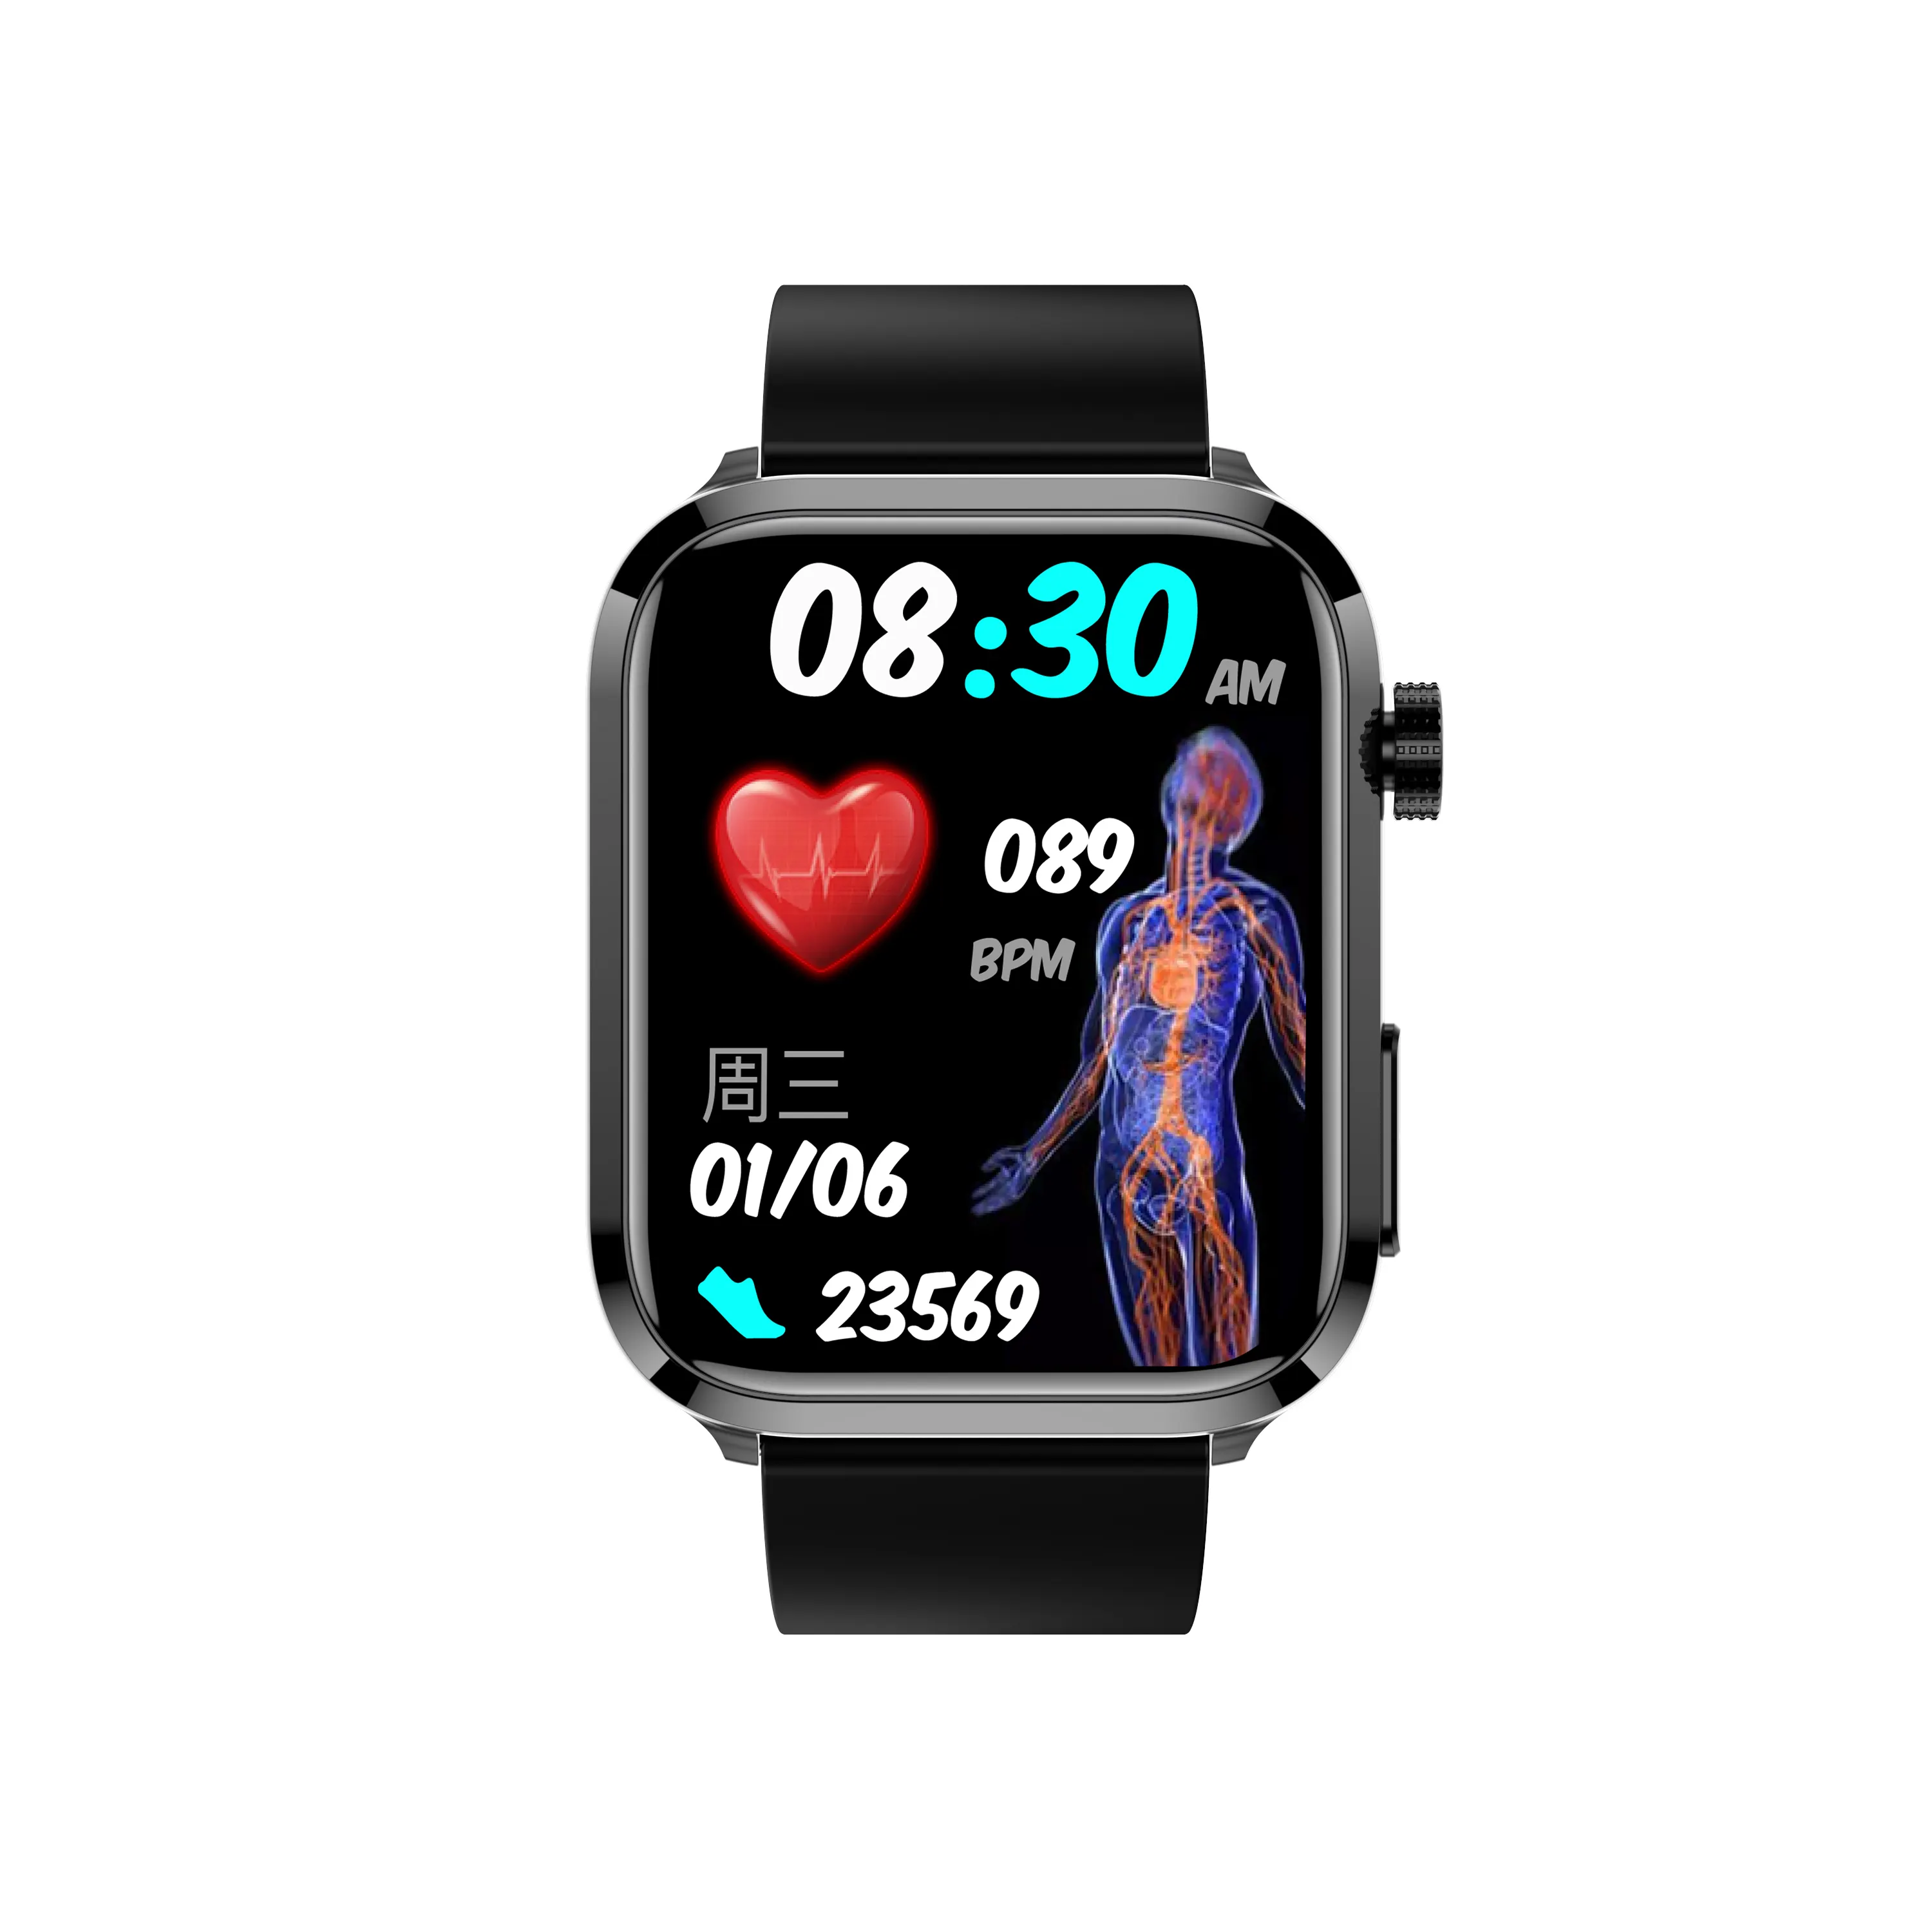 Smart watch Gauge cholesterol uric acid blood sugar glucose monitoring system detector meter test kit set smartwatch